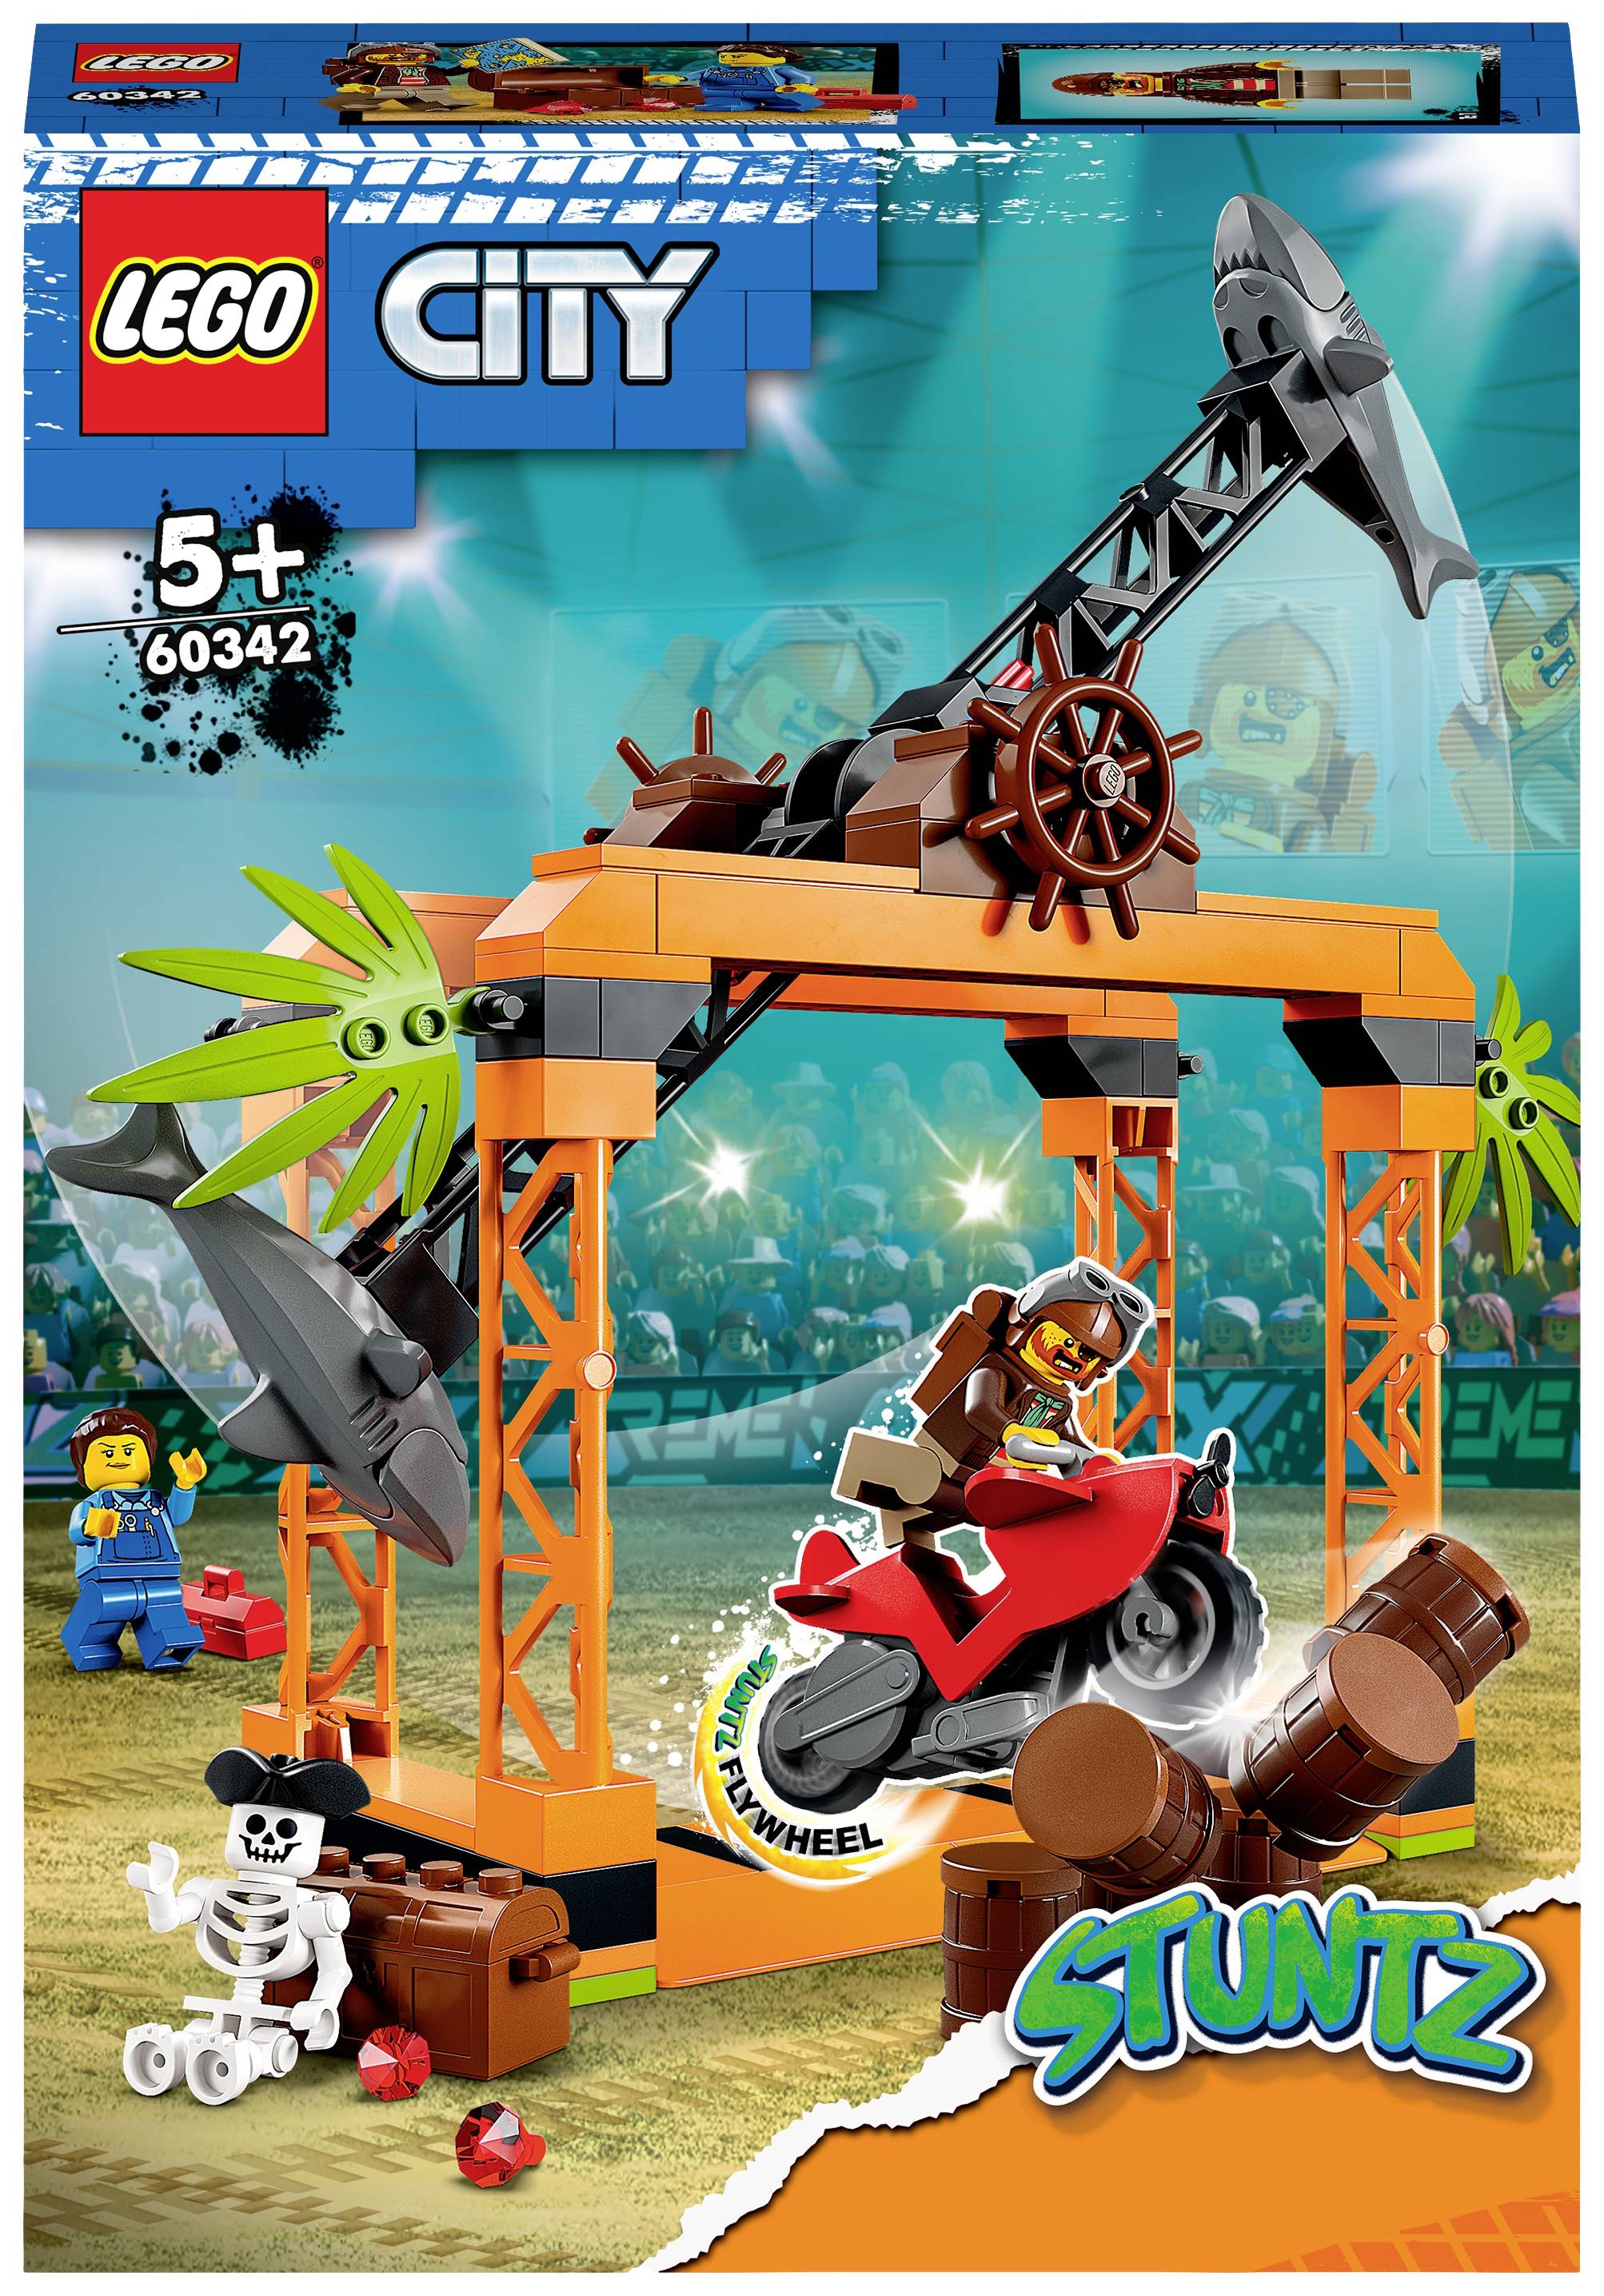 Haiangriff-Stuntchallenge 60342 CITY LEGO® kaufen